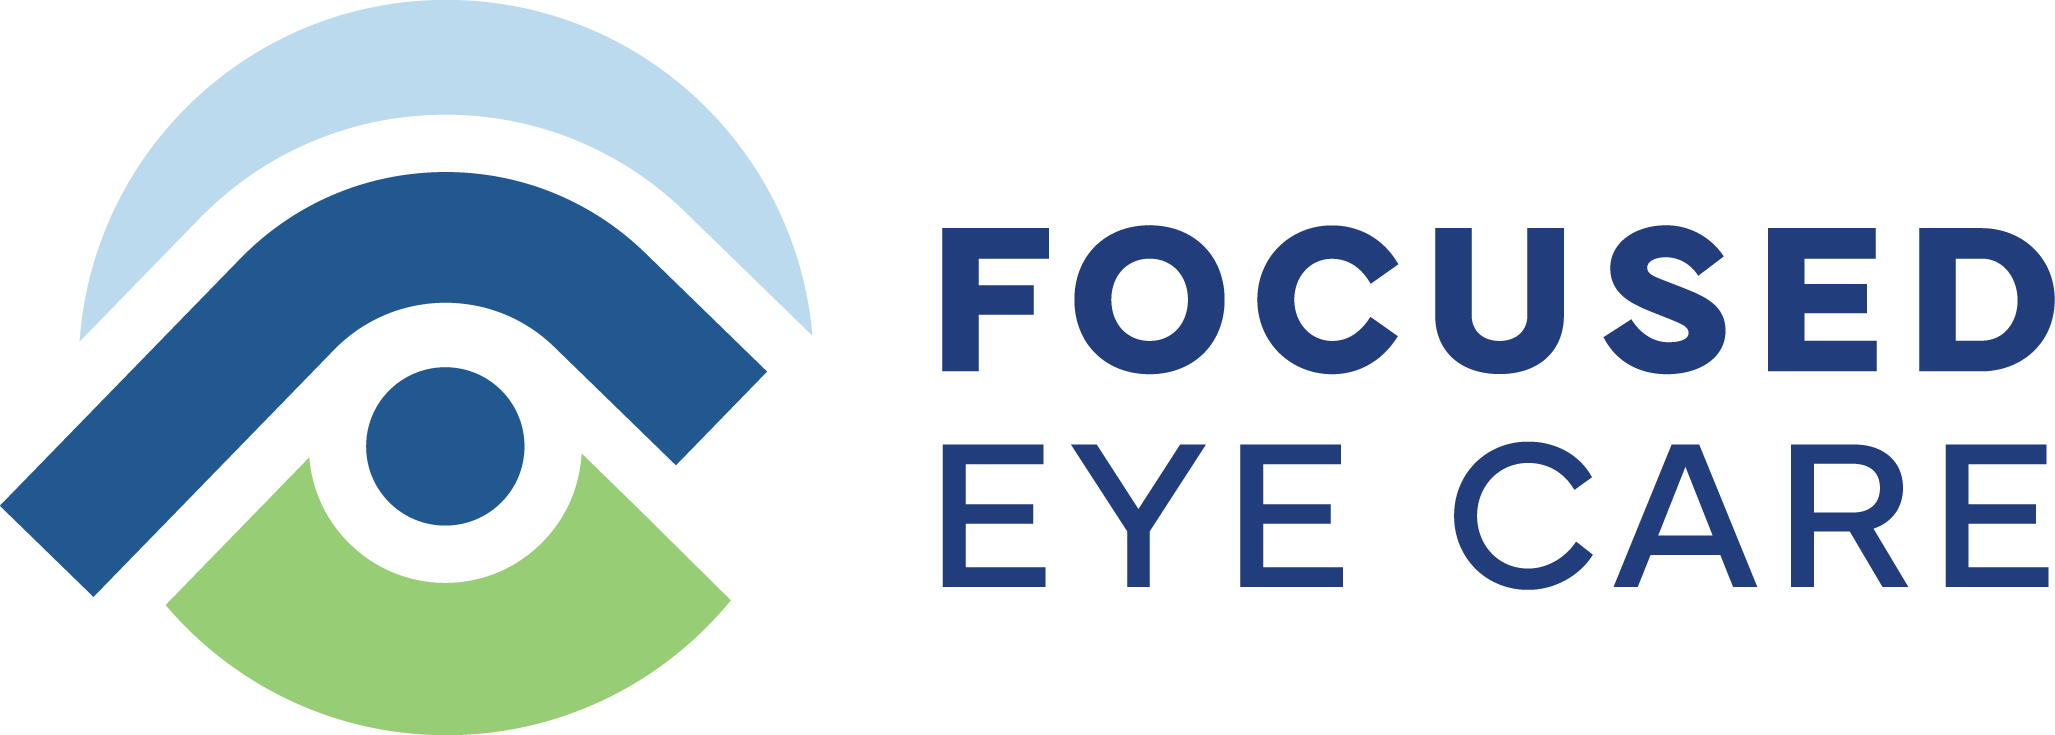 Focused Eye Care